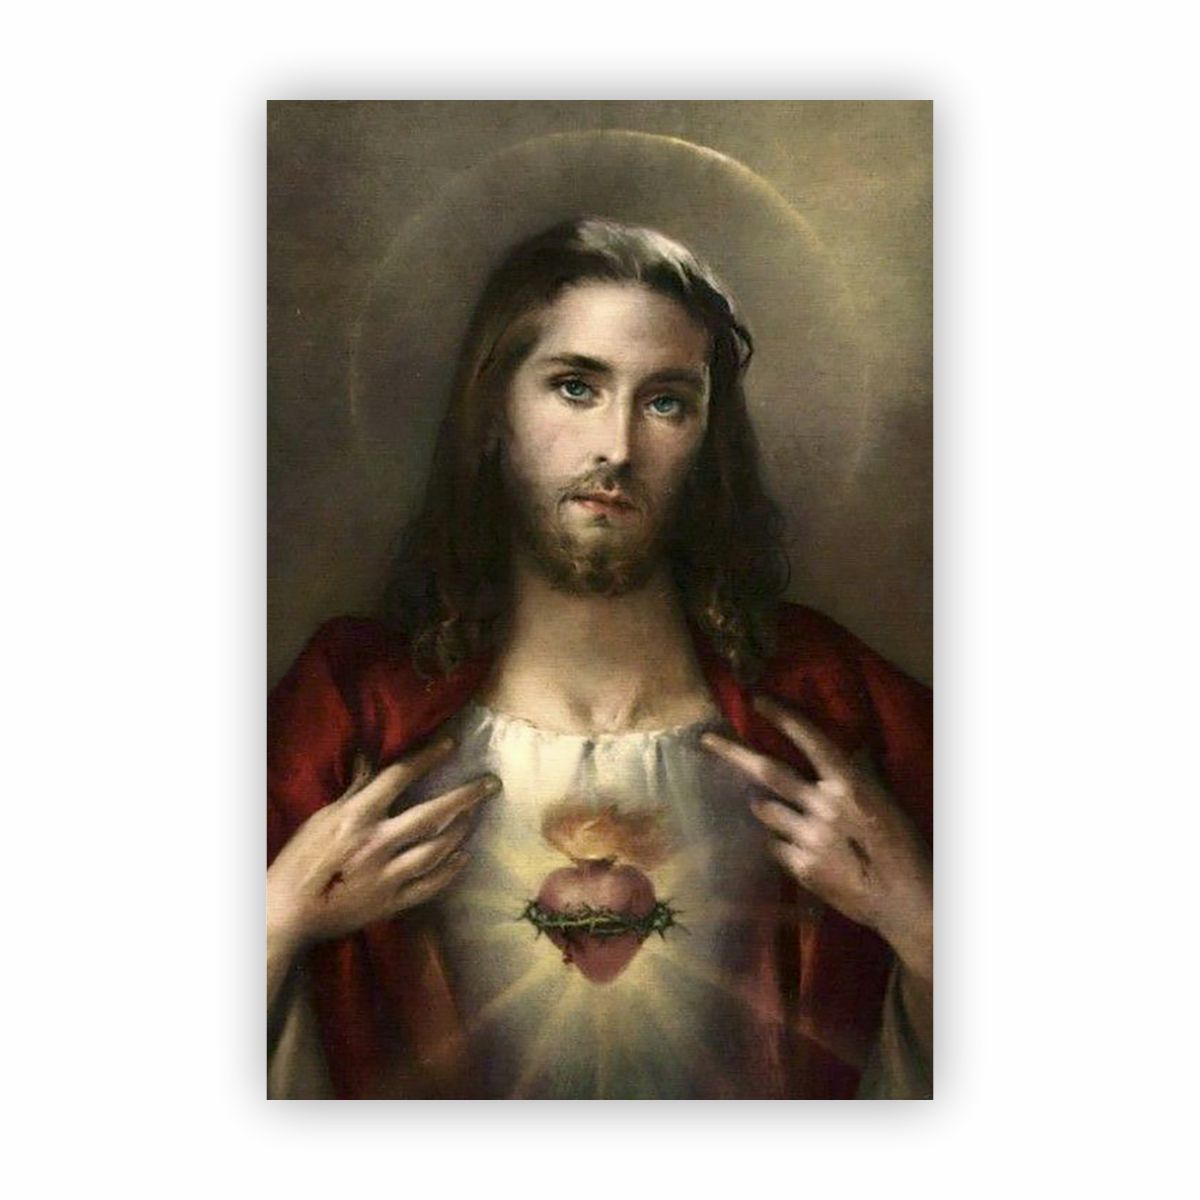 Quadro Canvas Religioso Jesus Cristo Cristianismo 60x40cm